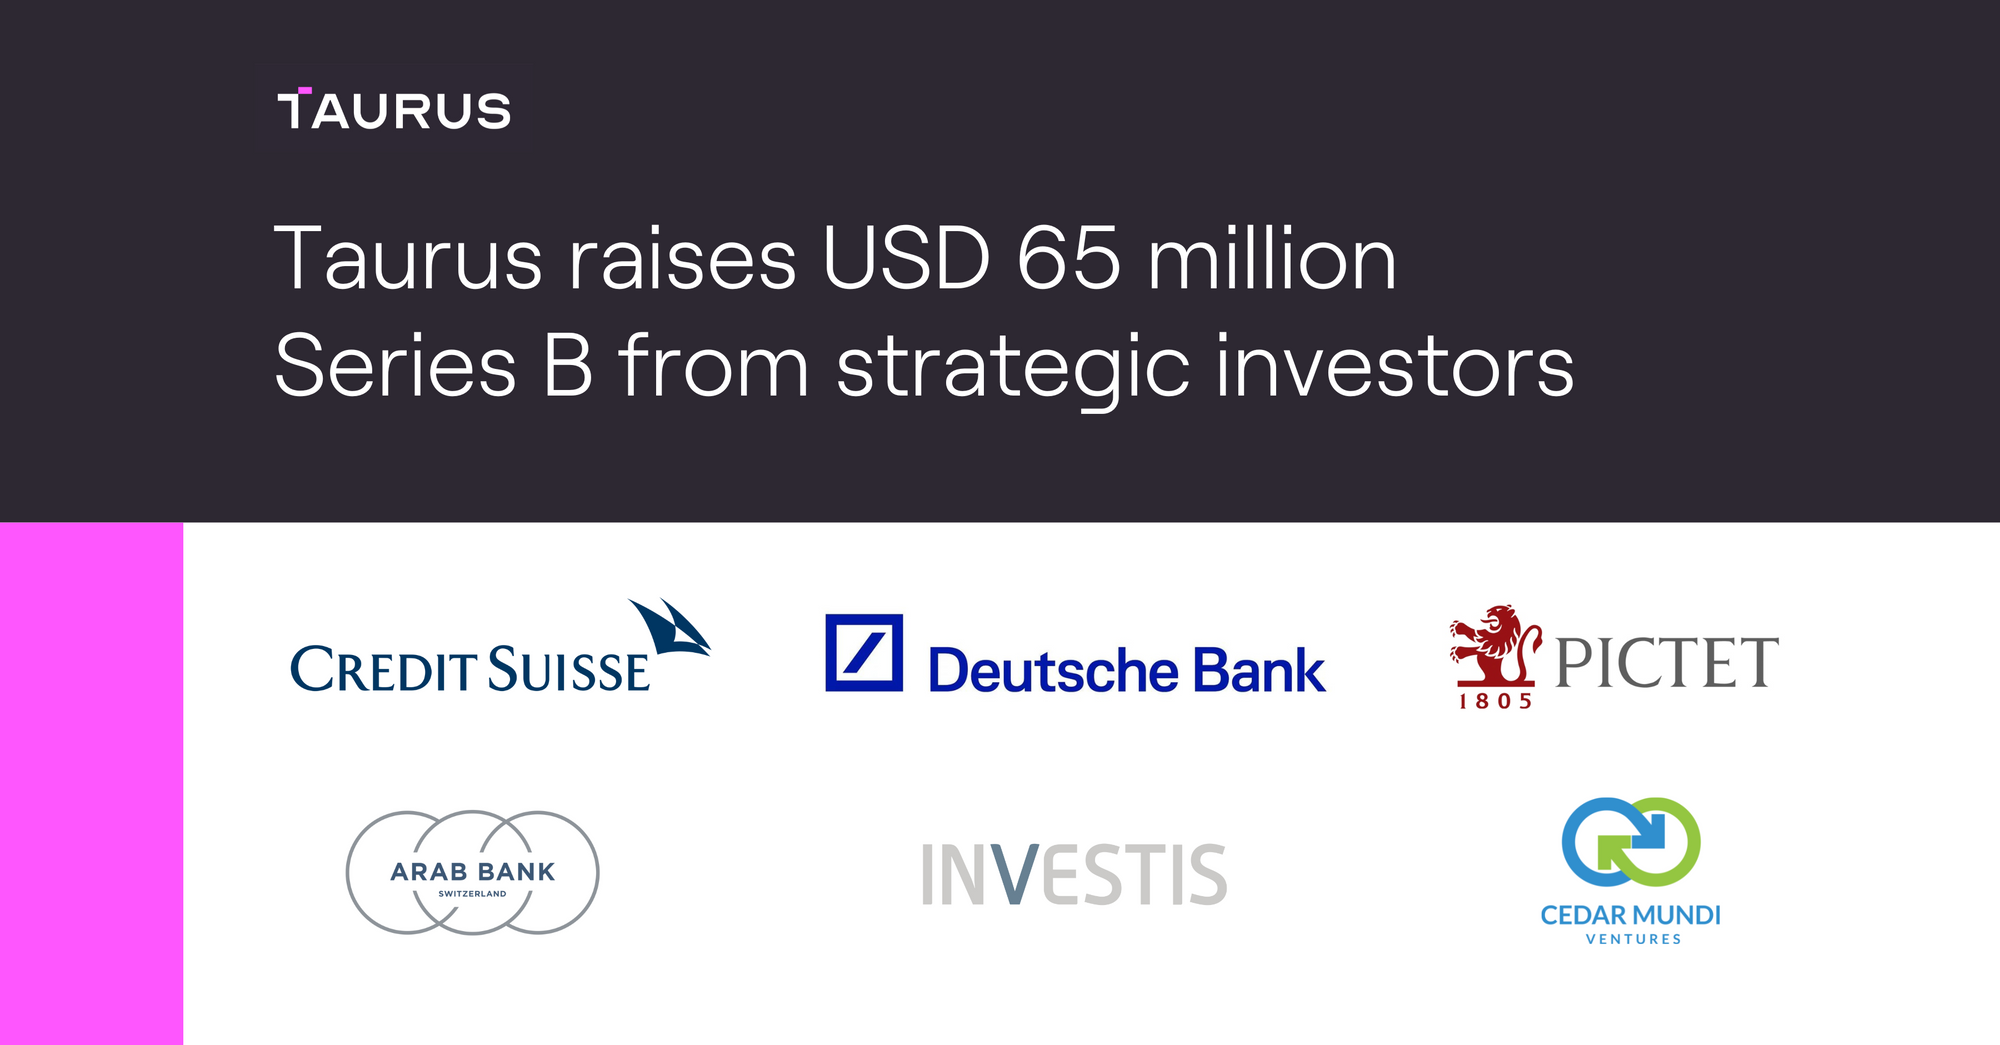 Taurus raises USD 65 million Series B from strategic investors